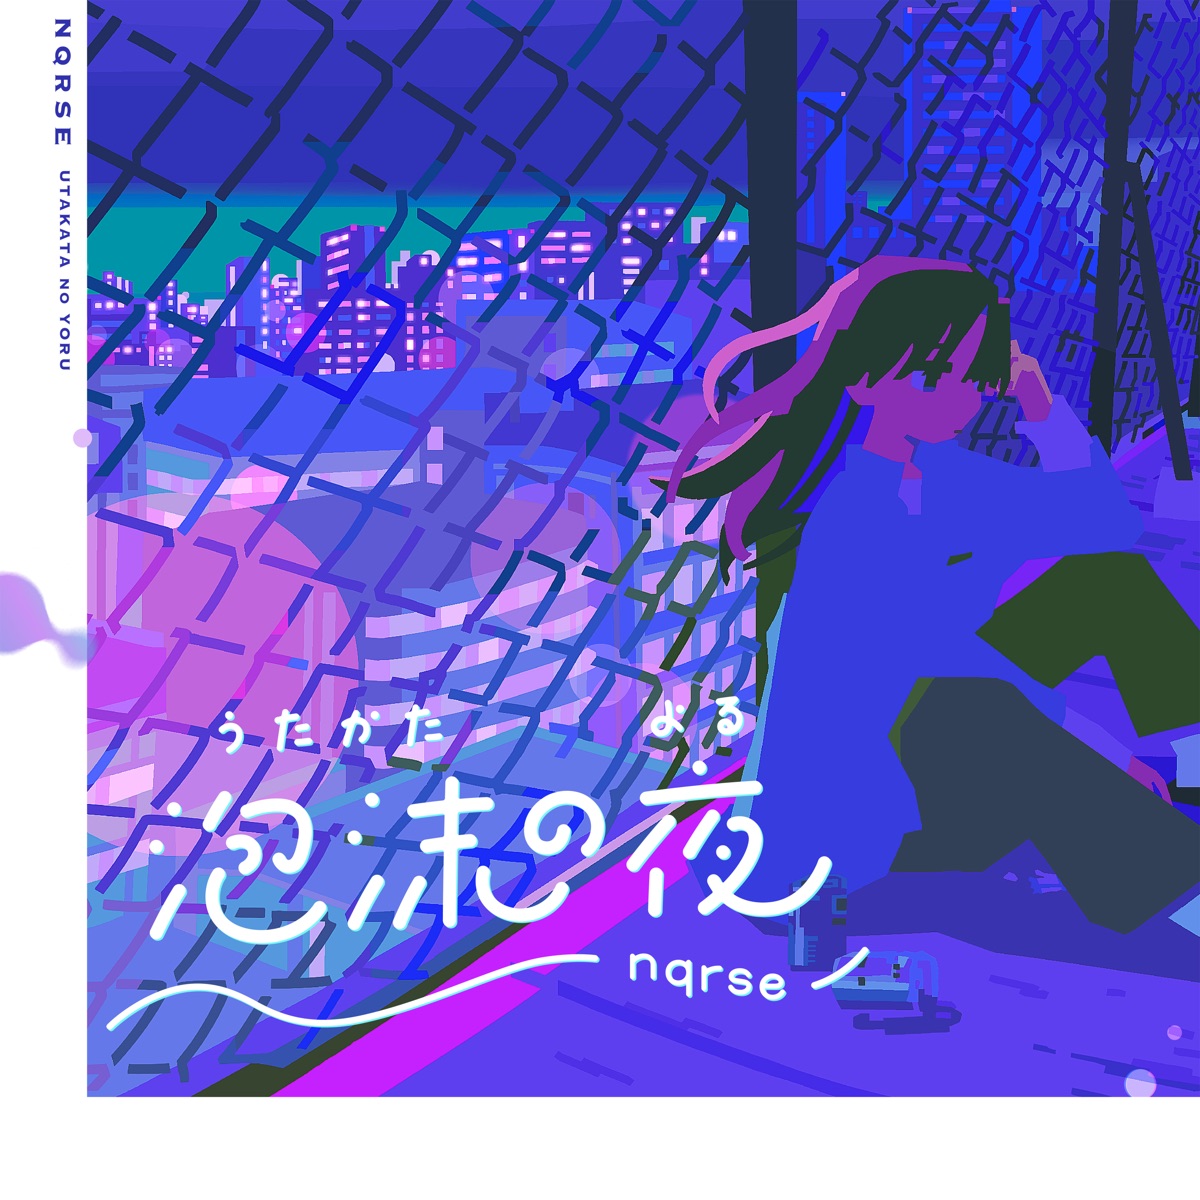 Cover art for『nqrse - Utakata no Yoru』from the release『Utakata no Yoru』